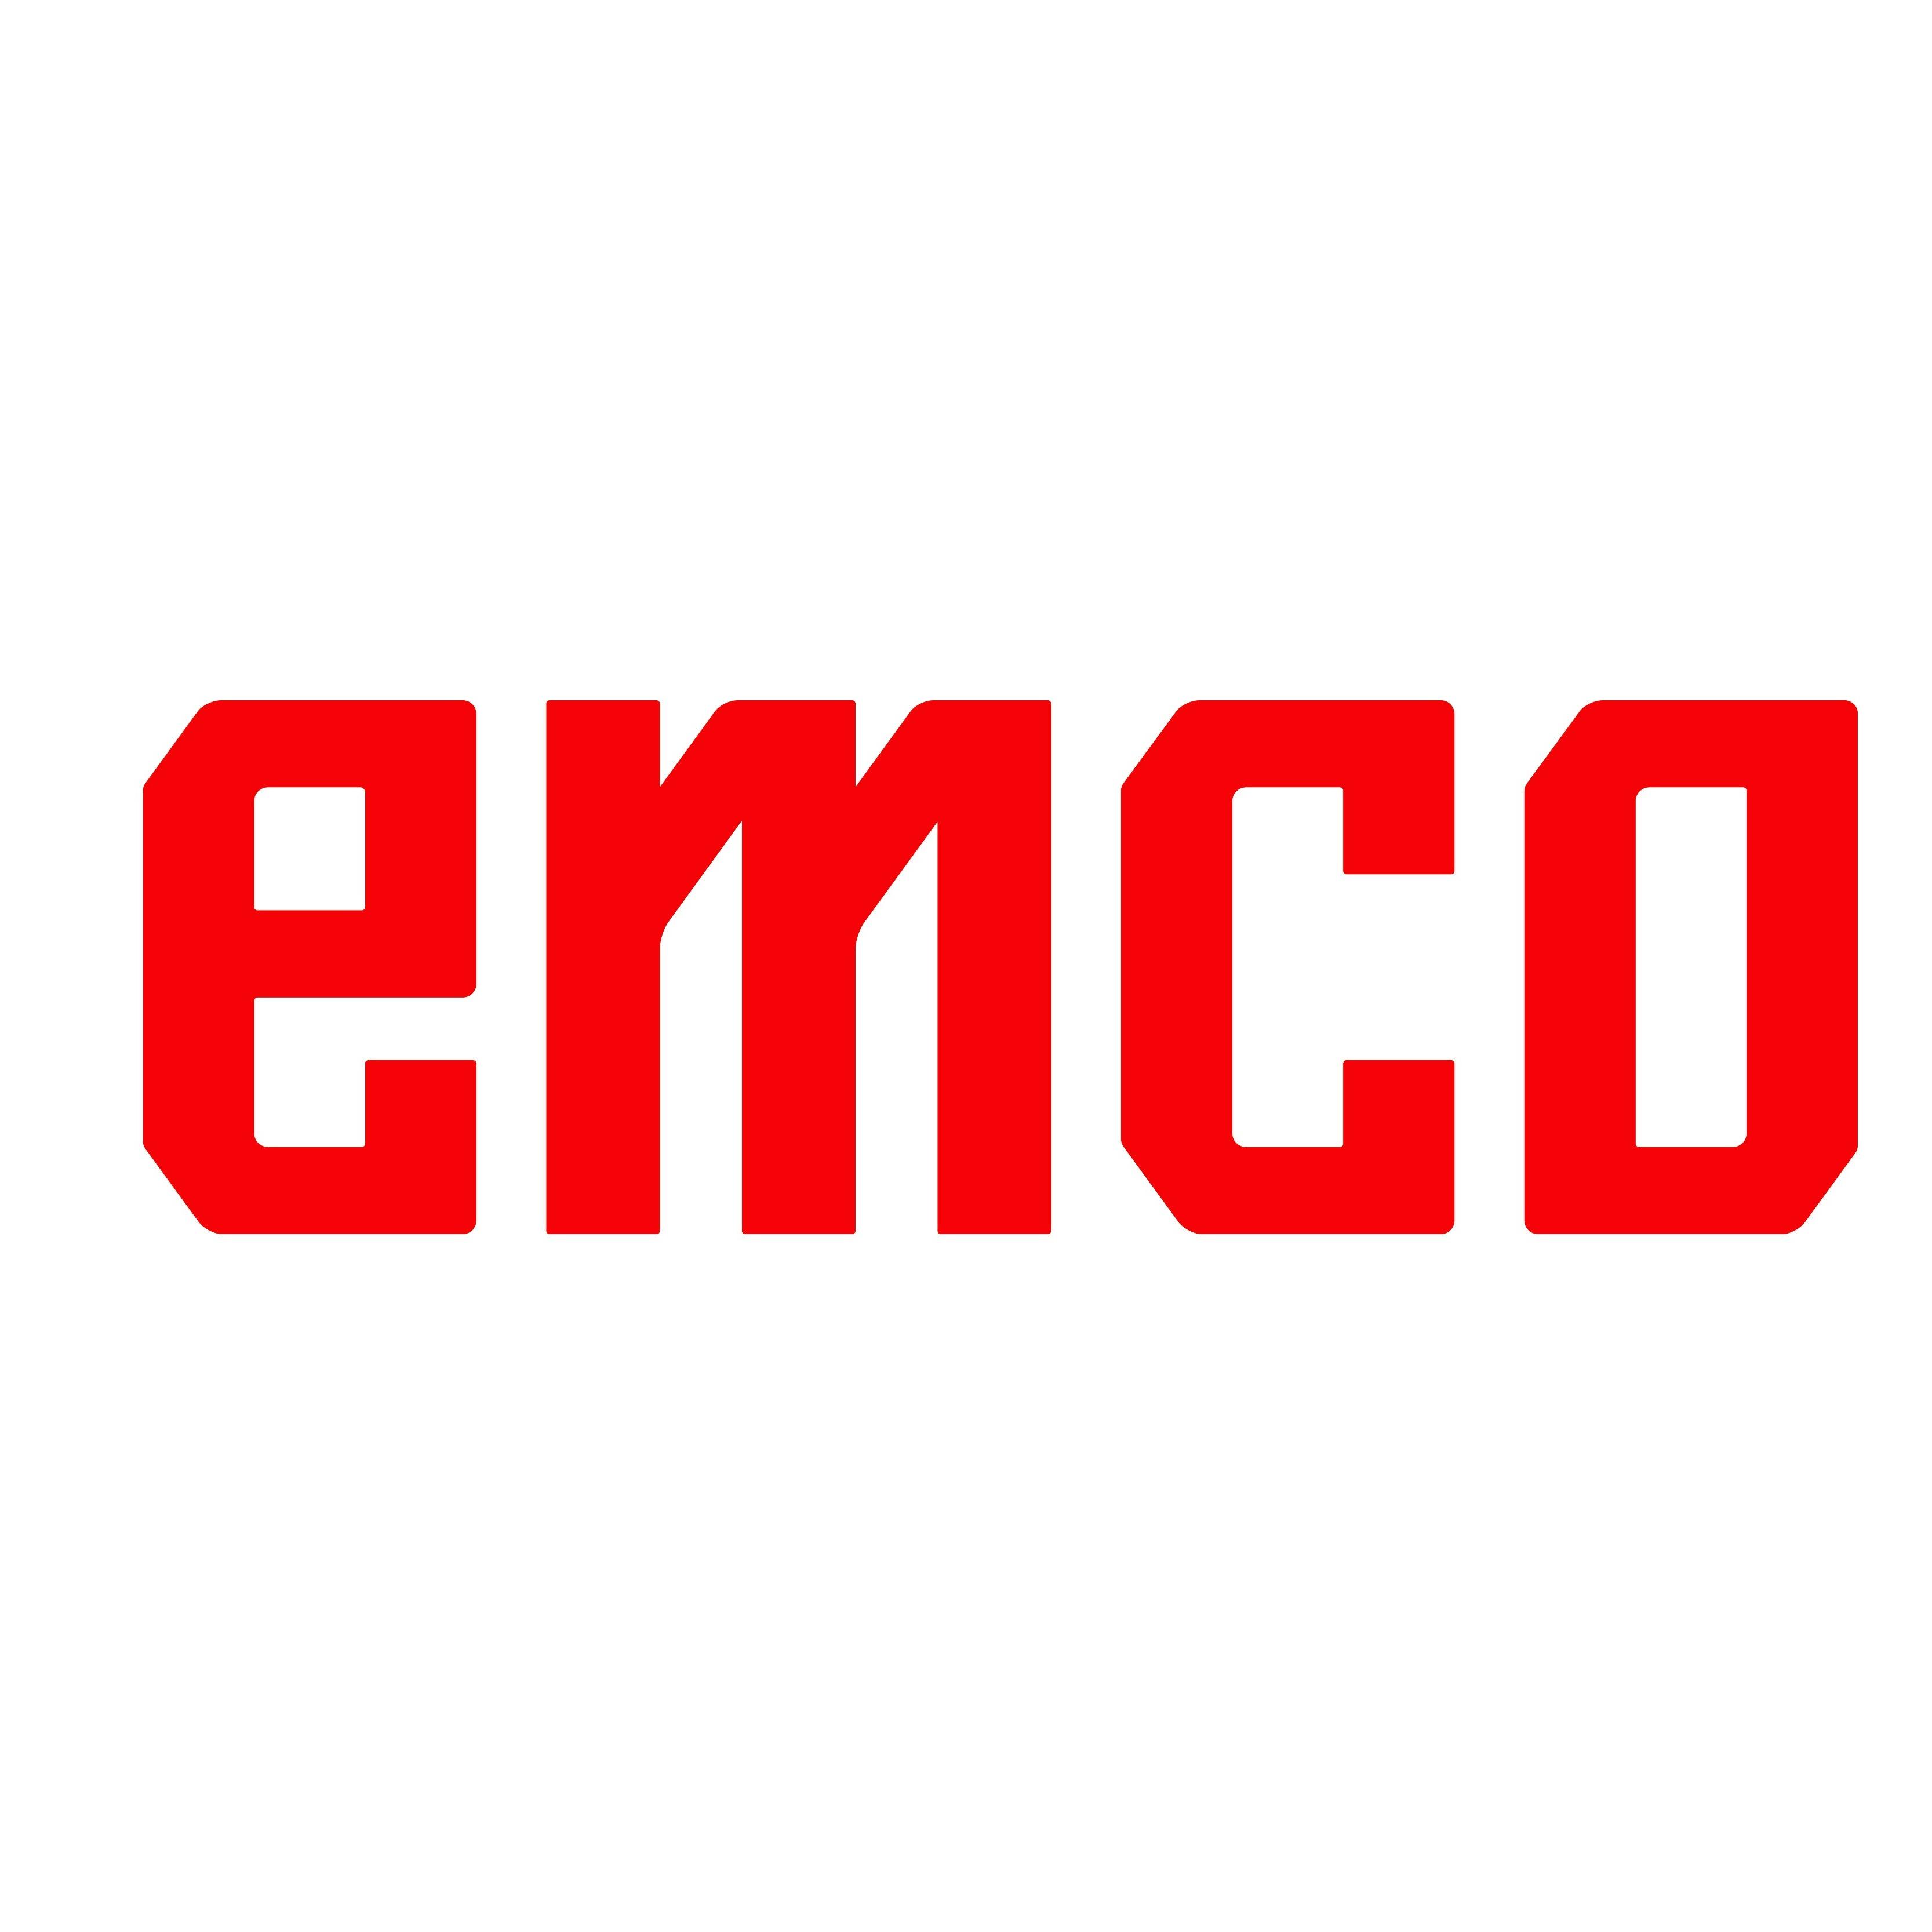 EMCO Drehmaschinen, Fräsmaschinen & CNC Training - Metal Fabricator - Hallein - 06245 8910 Austria | ShowMeLocal.com